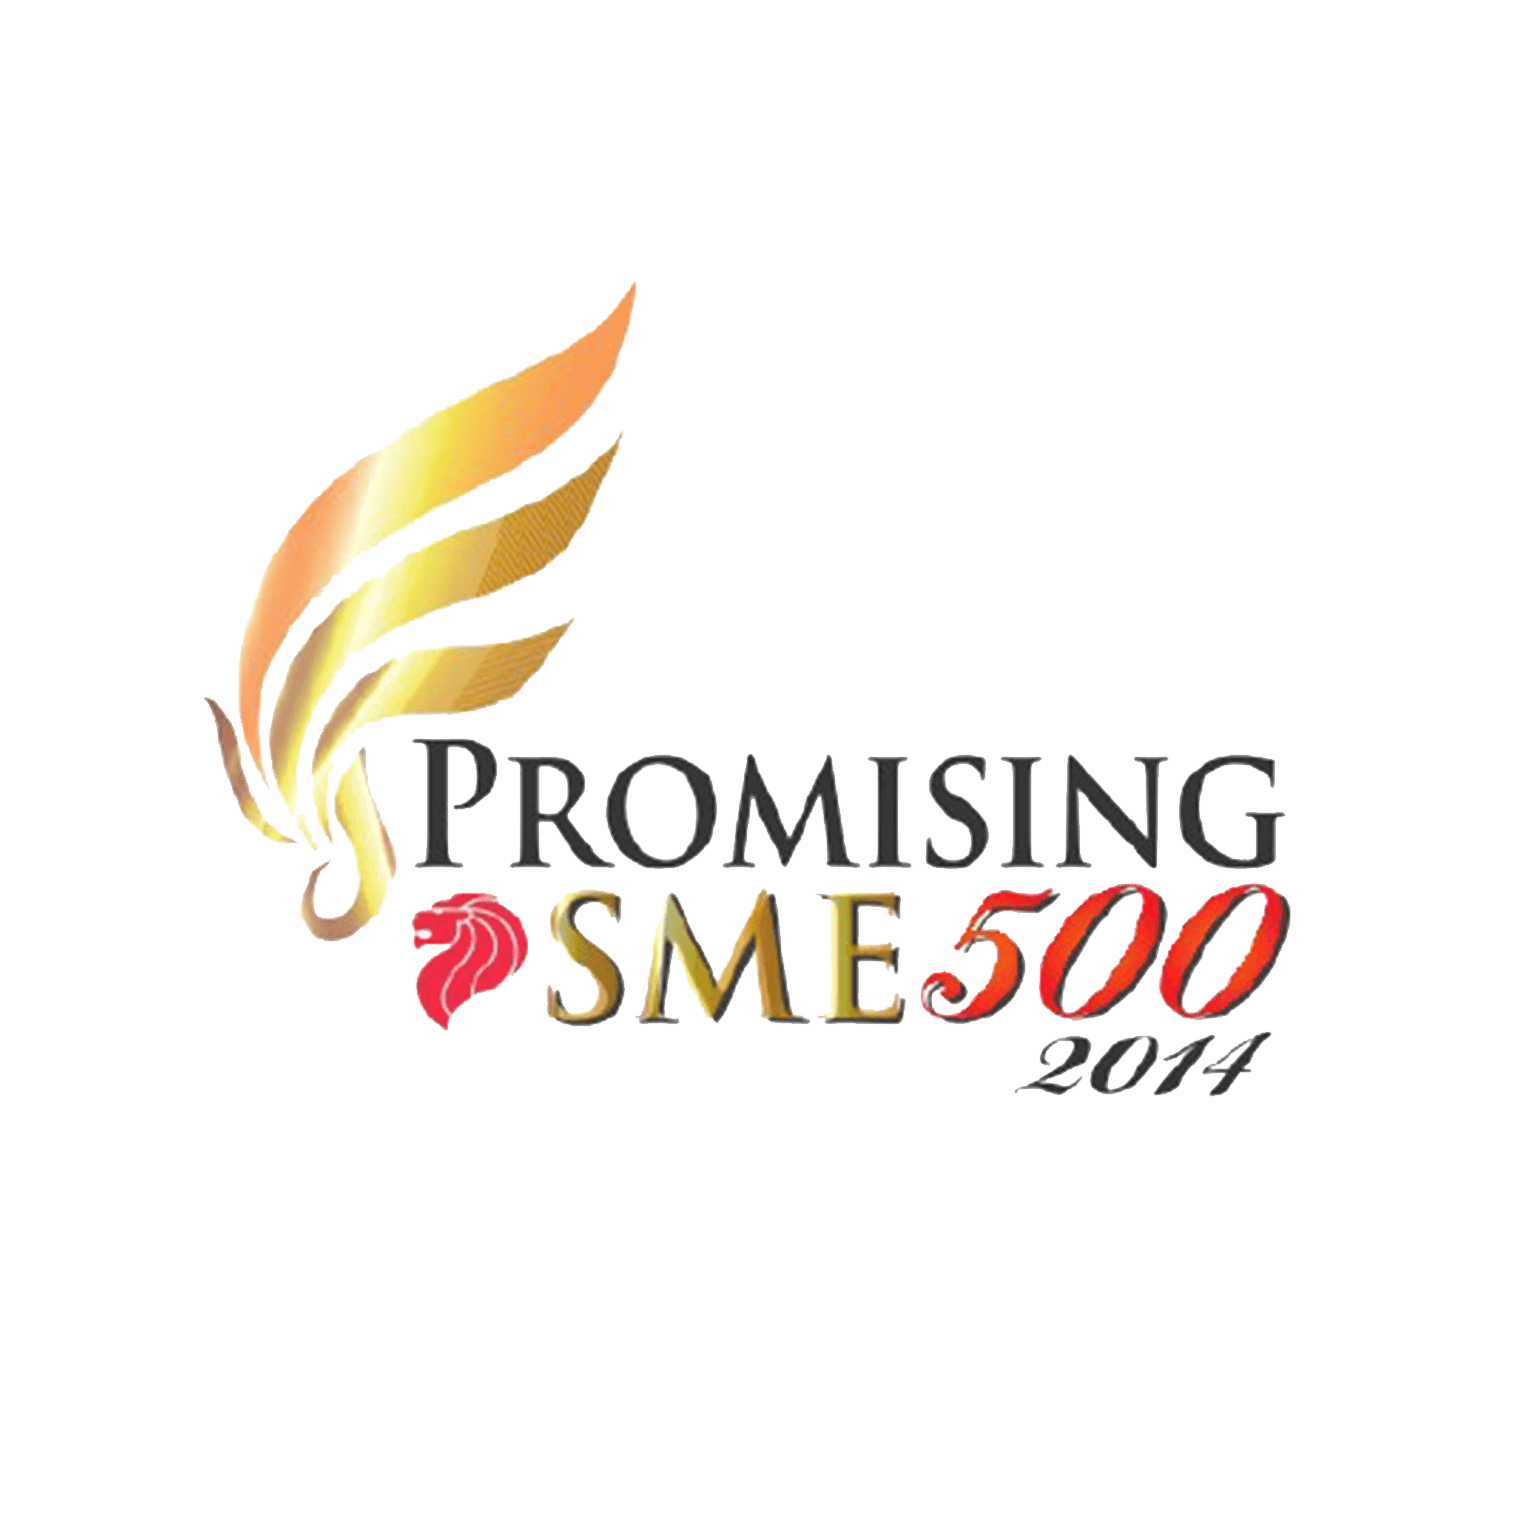 //cutislaserclinics.com/wp-content/uploads/2021/01/2014-PROMISING-SME-500-BUSINESS-LUMINARY-1.png